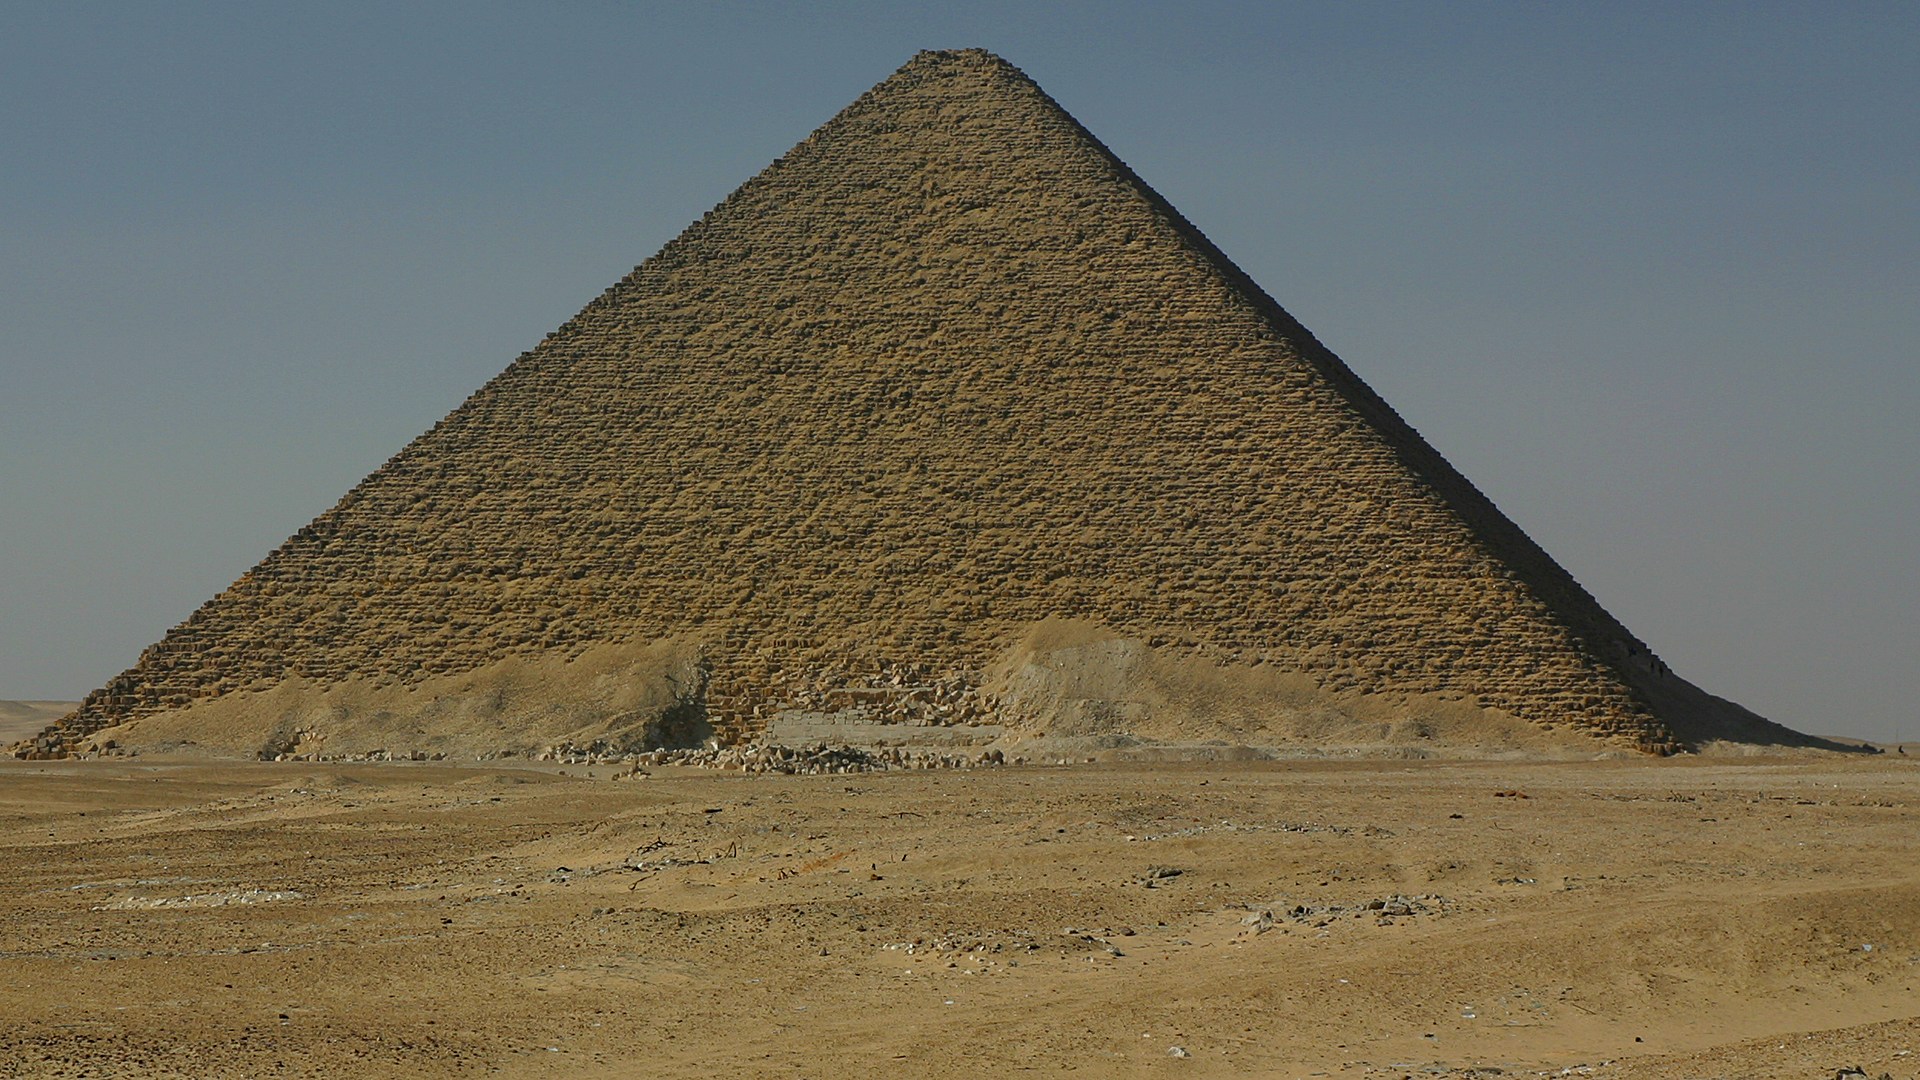 http://www.richard-seaman.com/Wallpaper/Travel/Egypt/RedPyramidWide.jpg